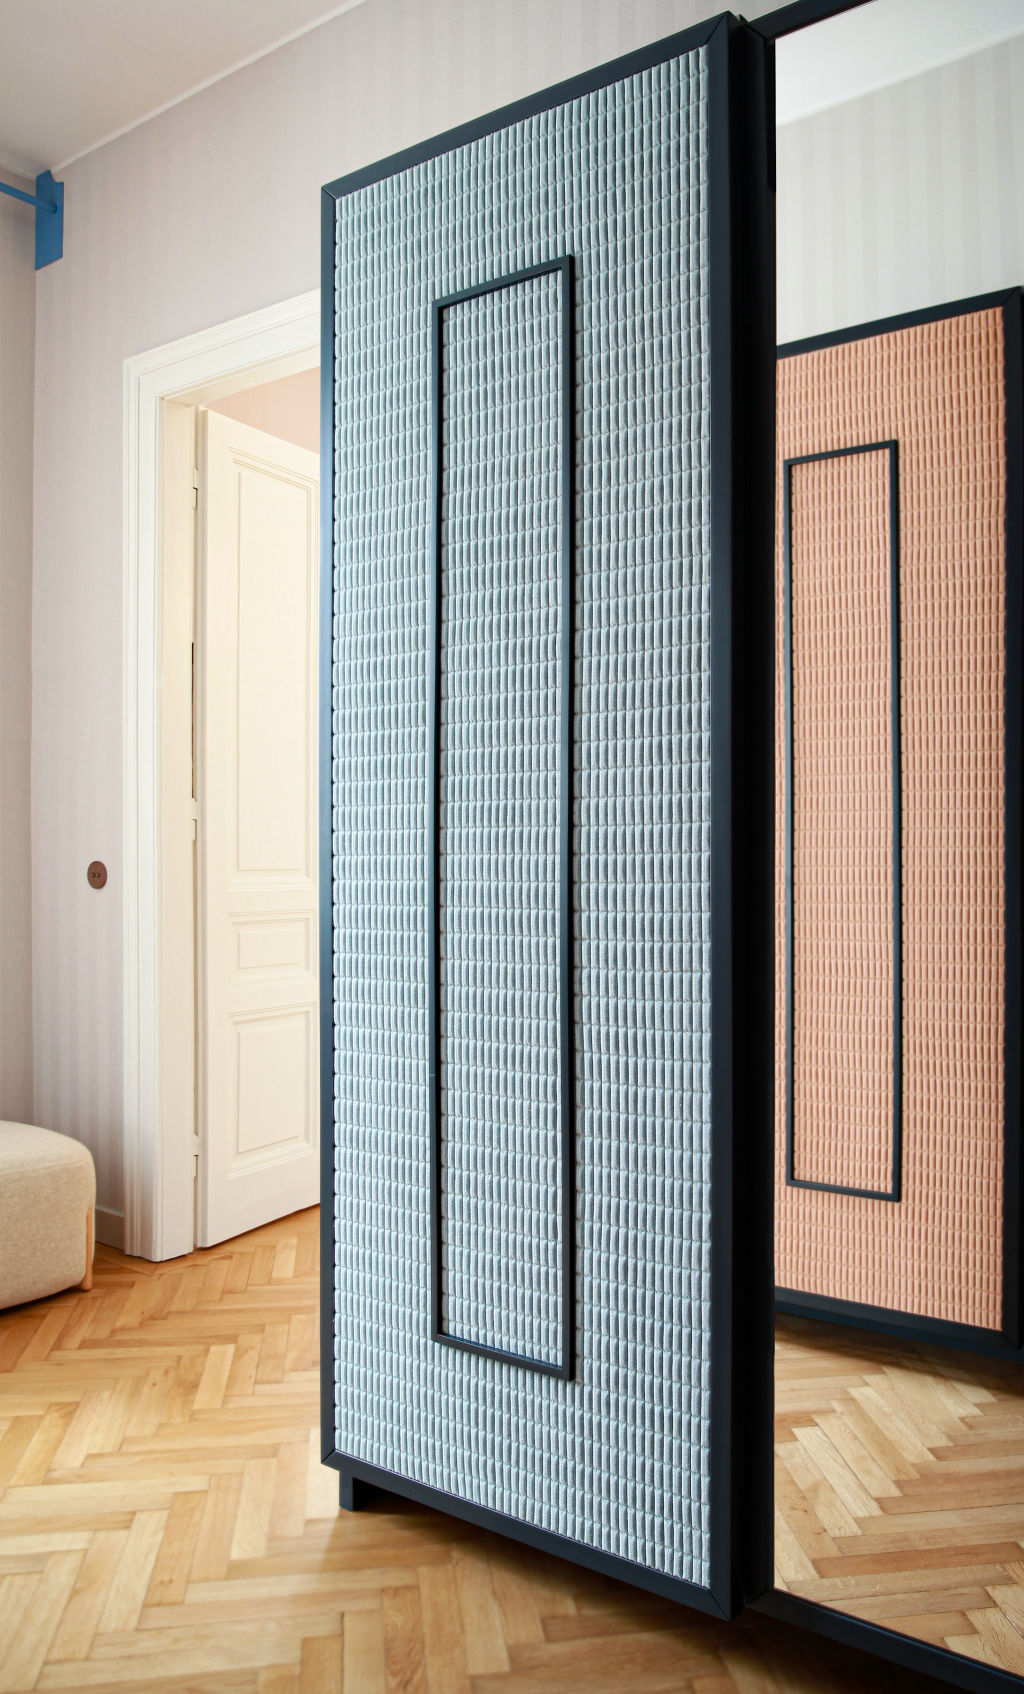 Fabric panel screens divide the living spaces. Photo: Carola Ripamonti